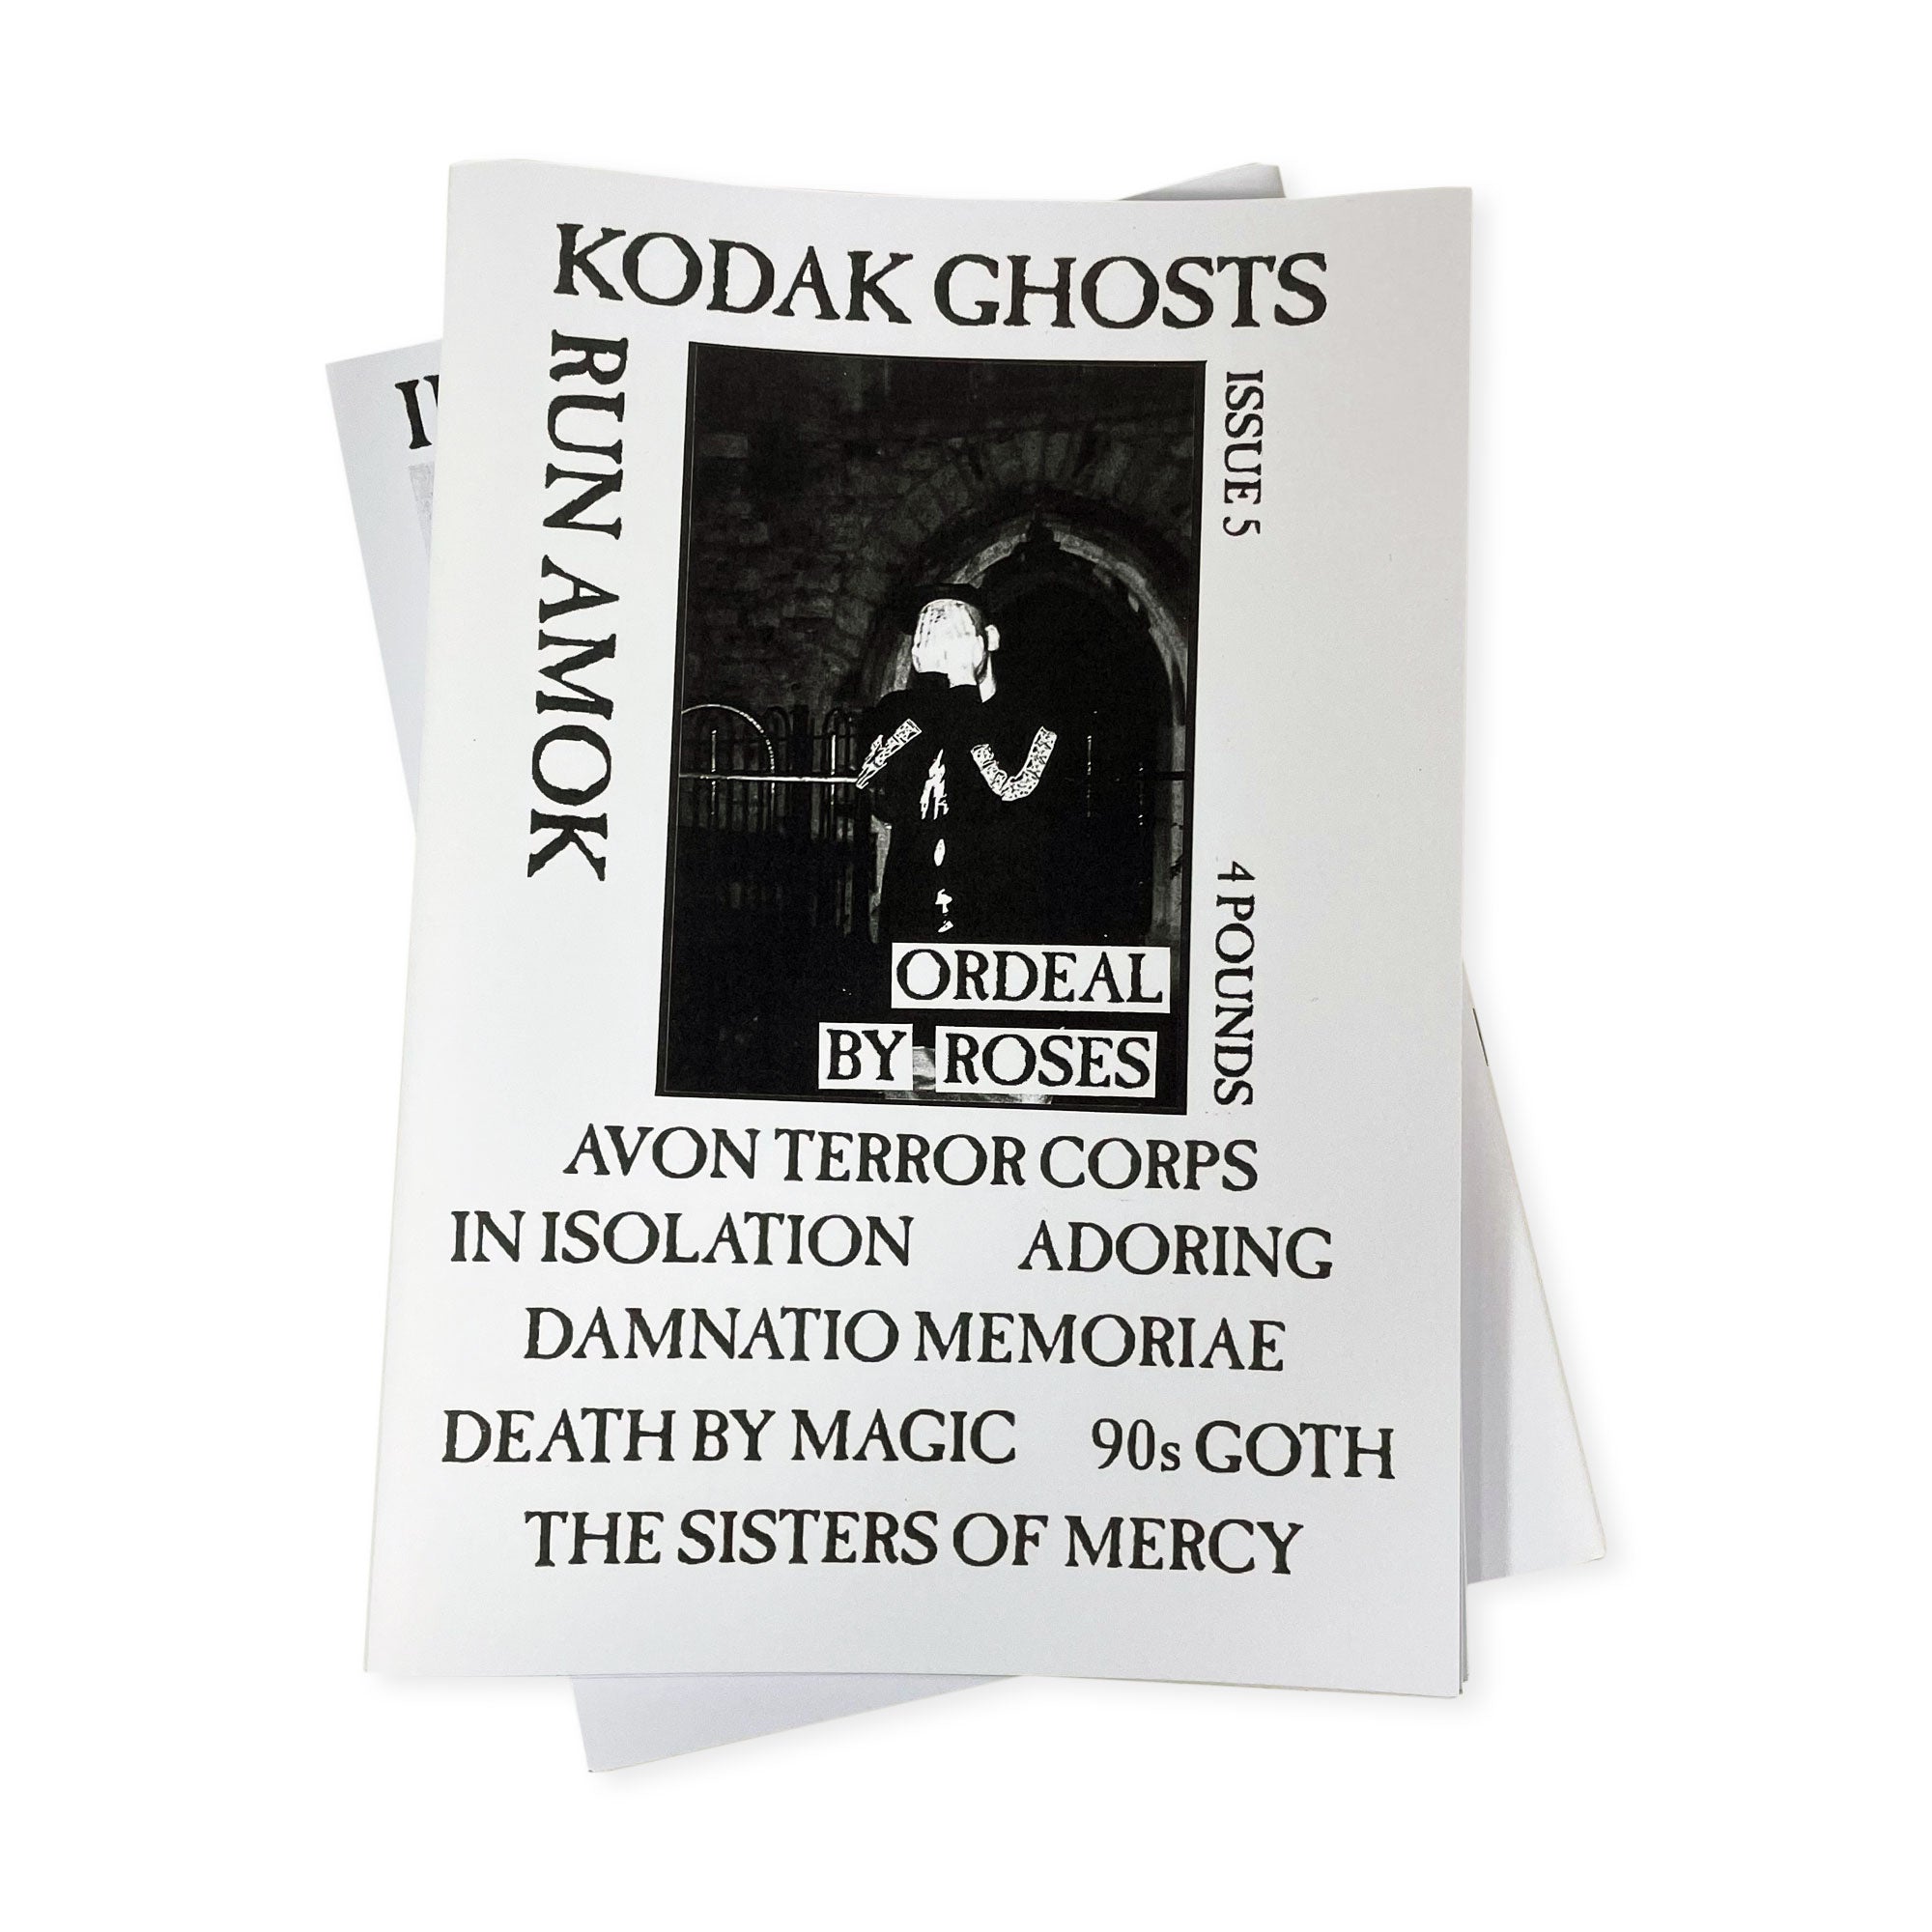 Kodak Ghosts Run Amok - Issue 5